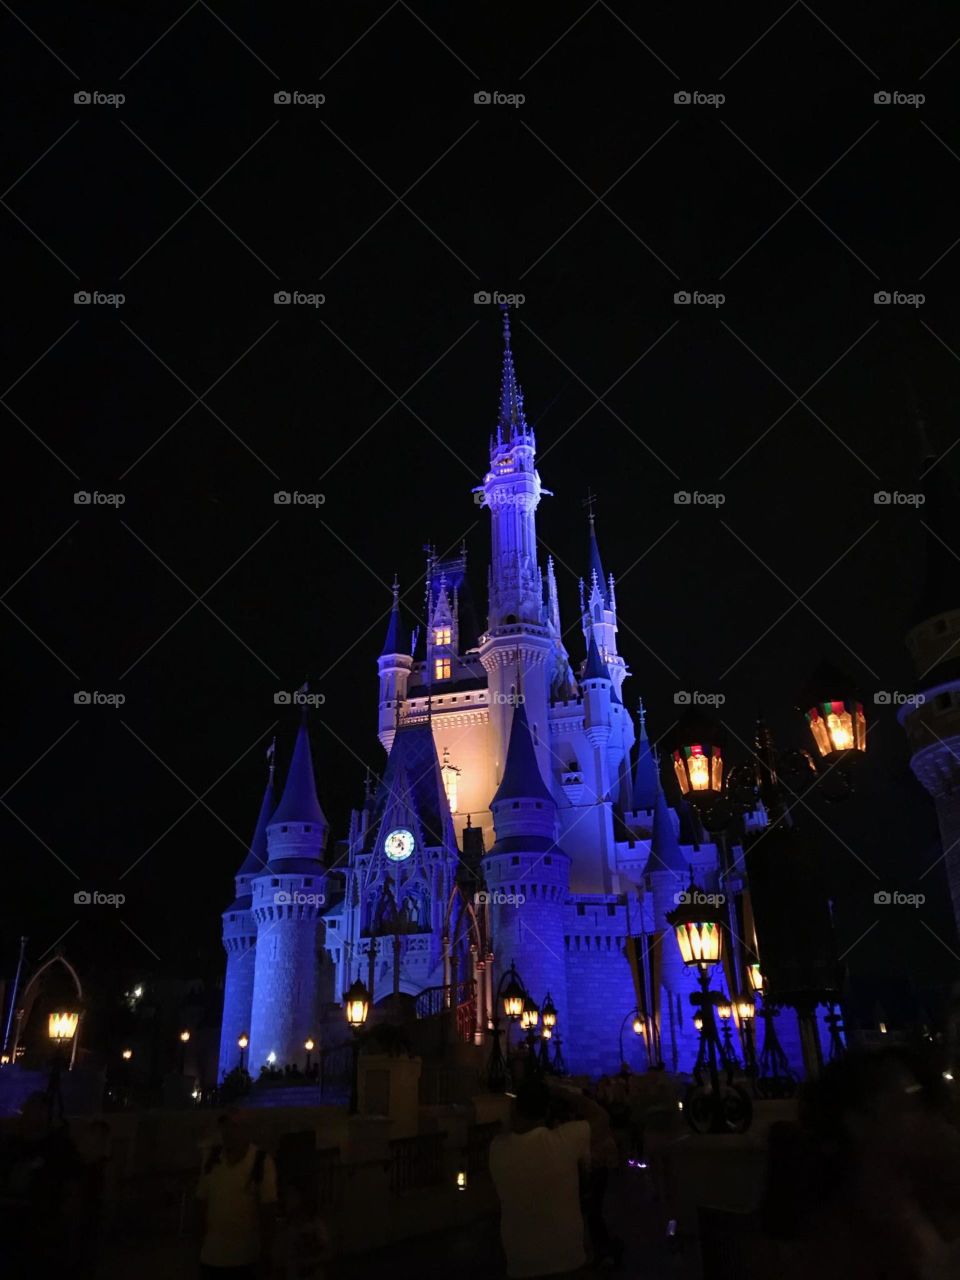 Cinderella's Castle lit up at night, walt disney world florida